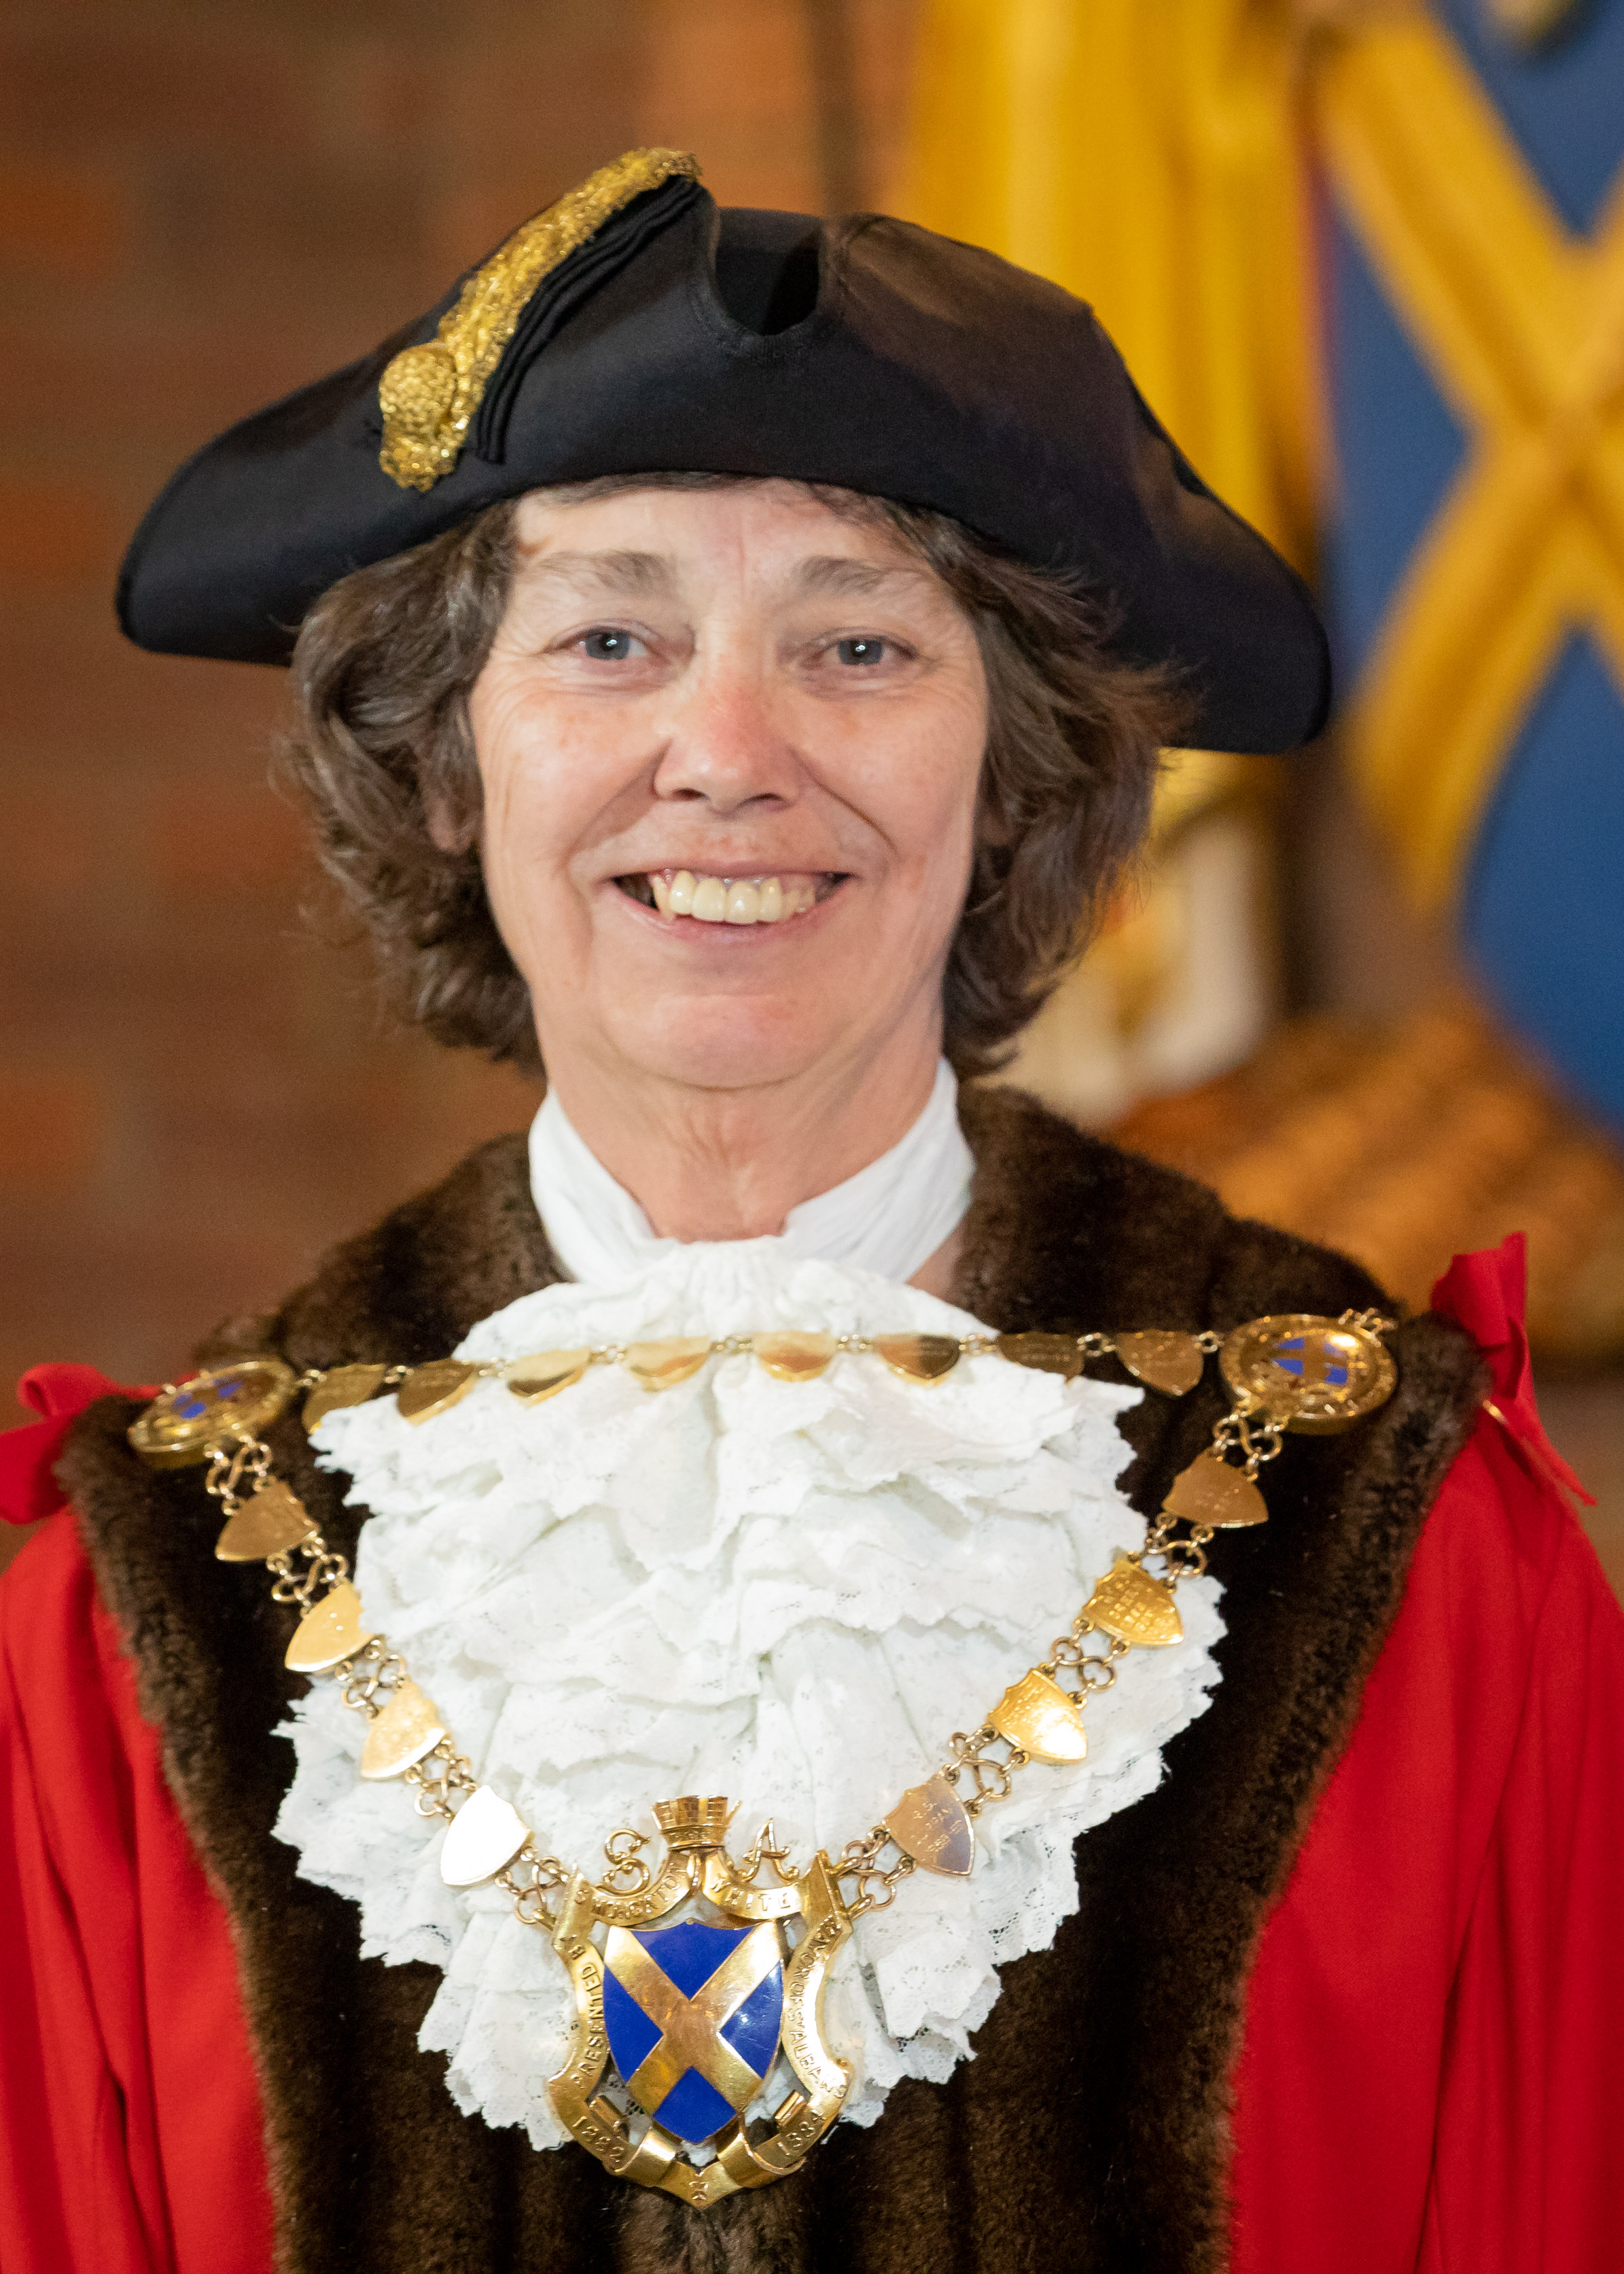 The Mayor, Cllr Janet Smith